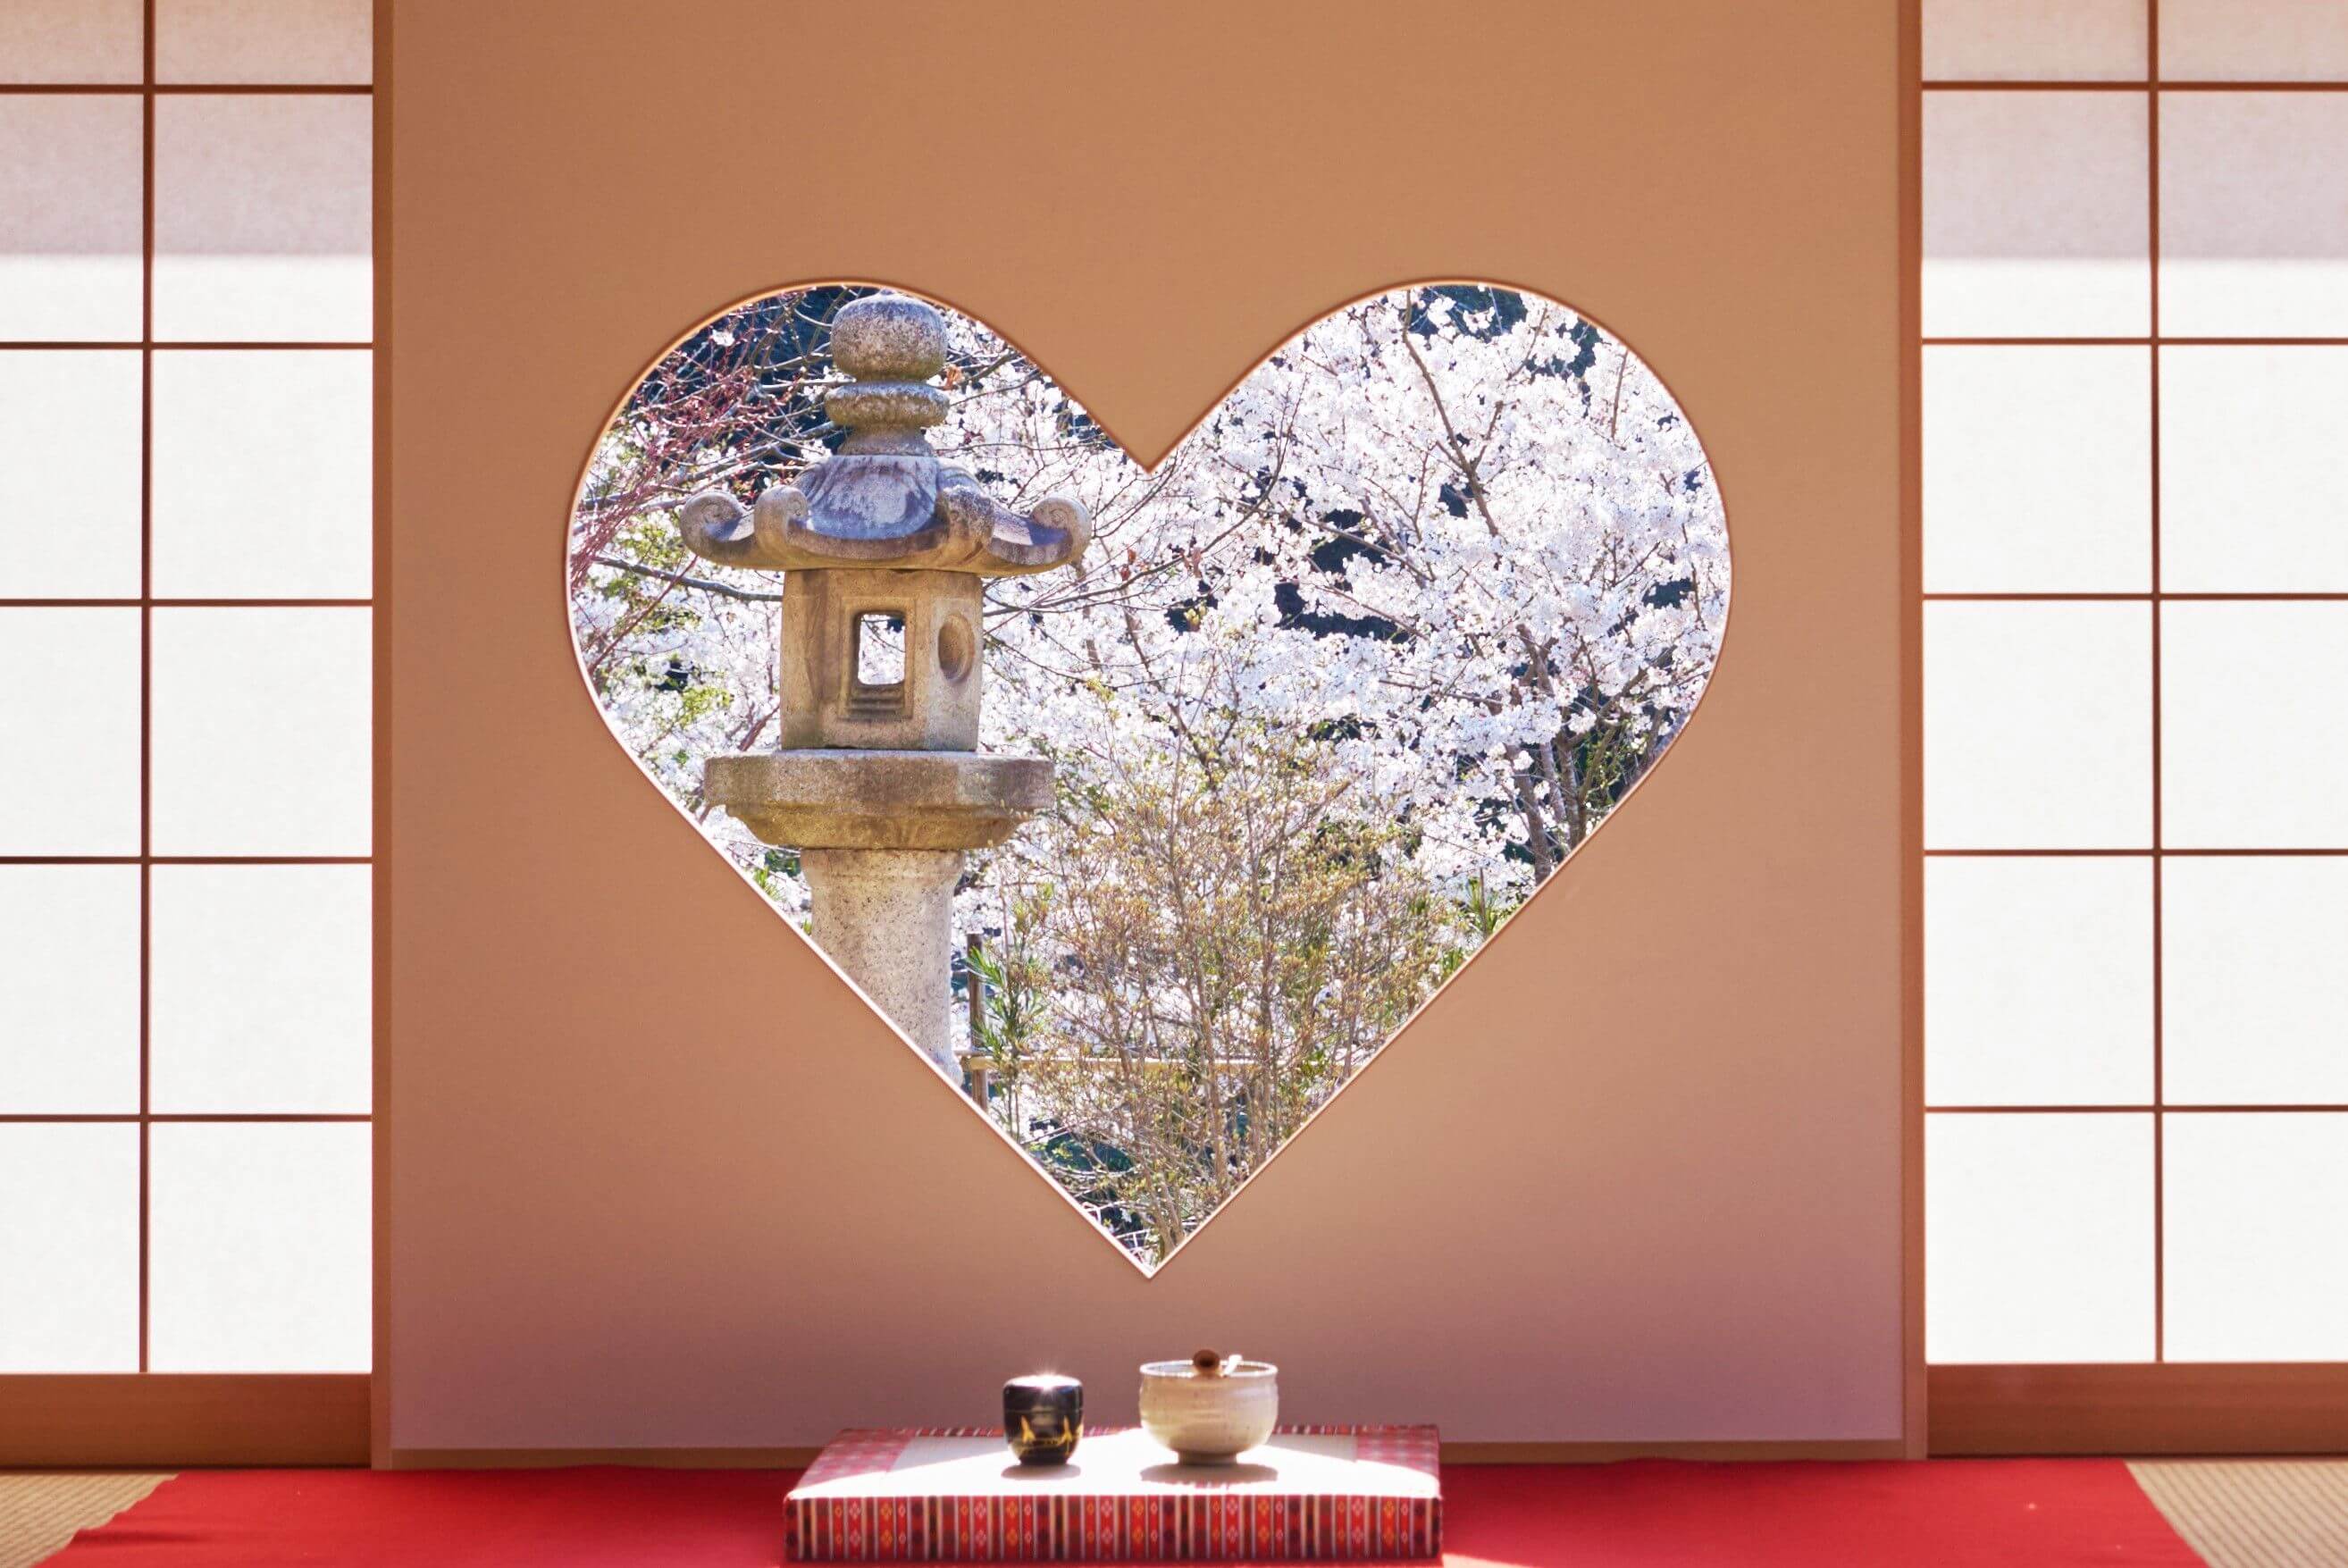 Matcha Dessert Buffet “MATCHA Sweet Garden” in Kyoto Uses Uji Matcha From Gion Tsujiri